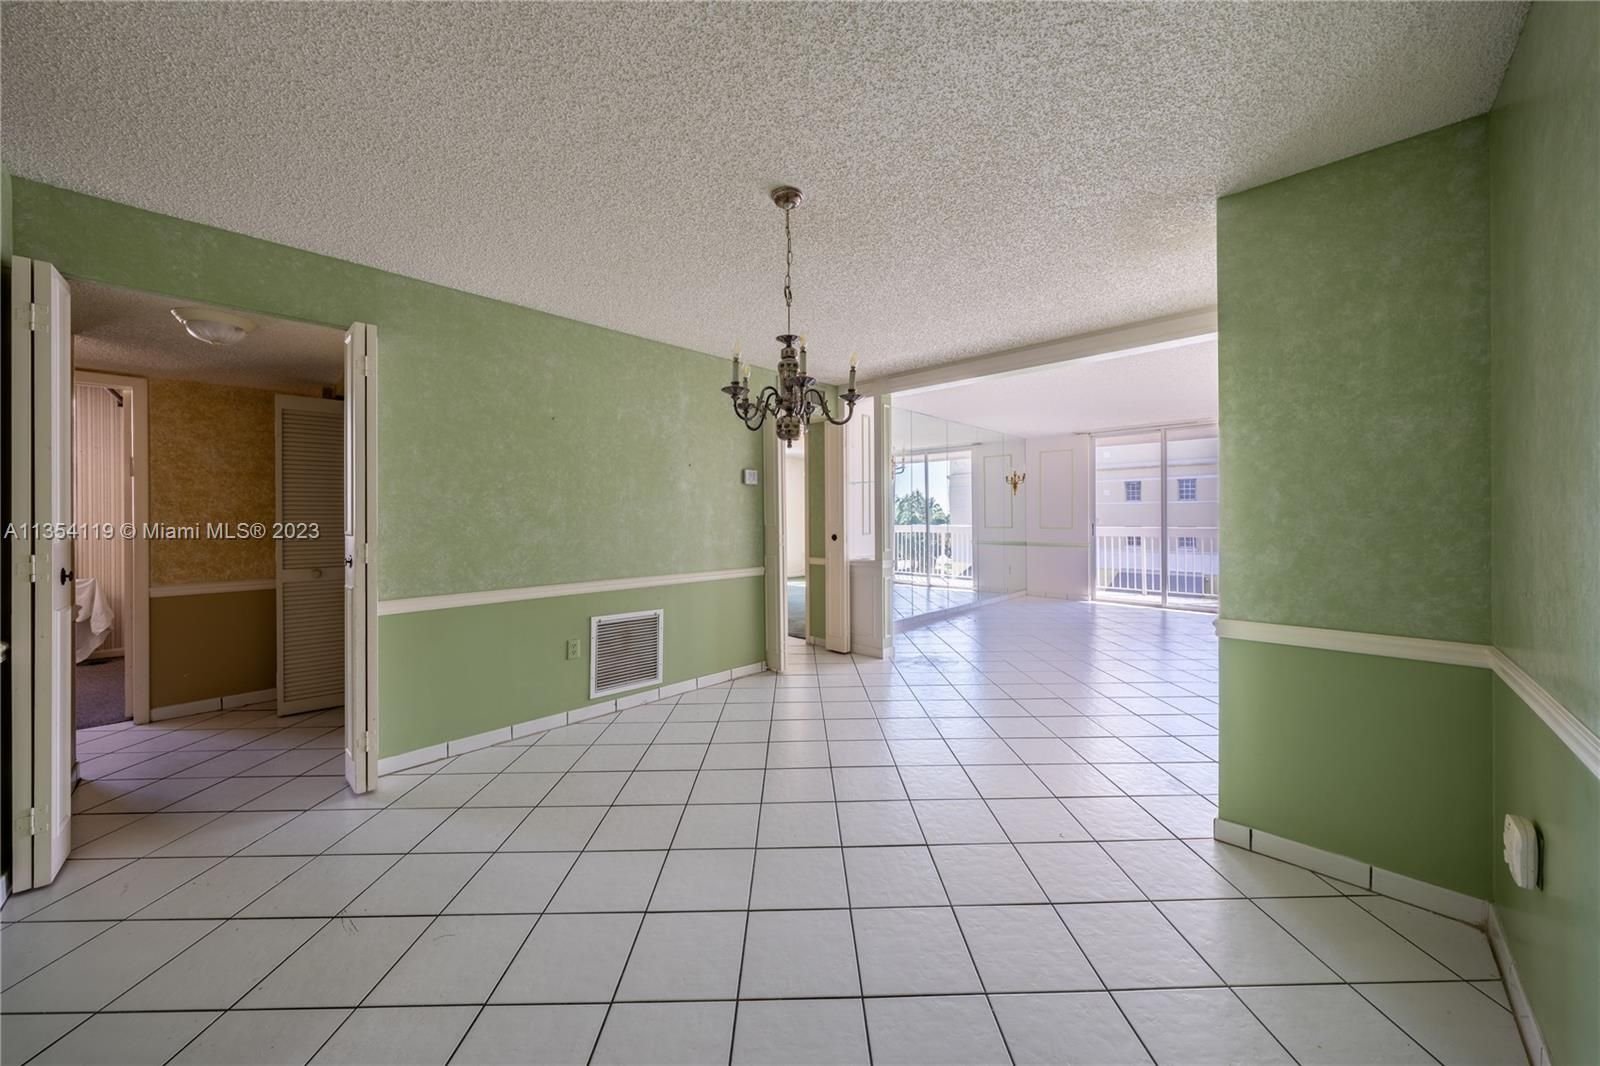 Real estate property located at 3600 Collins Ave #303, Miami-Dade County, Miami Beach, FL